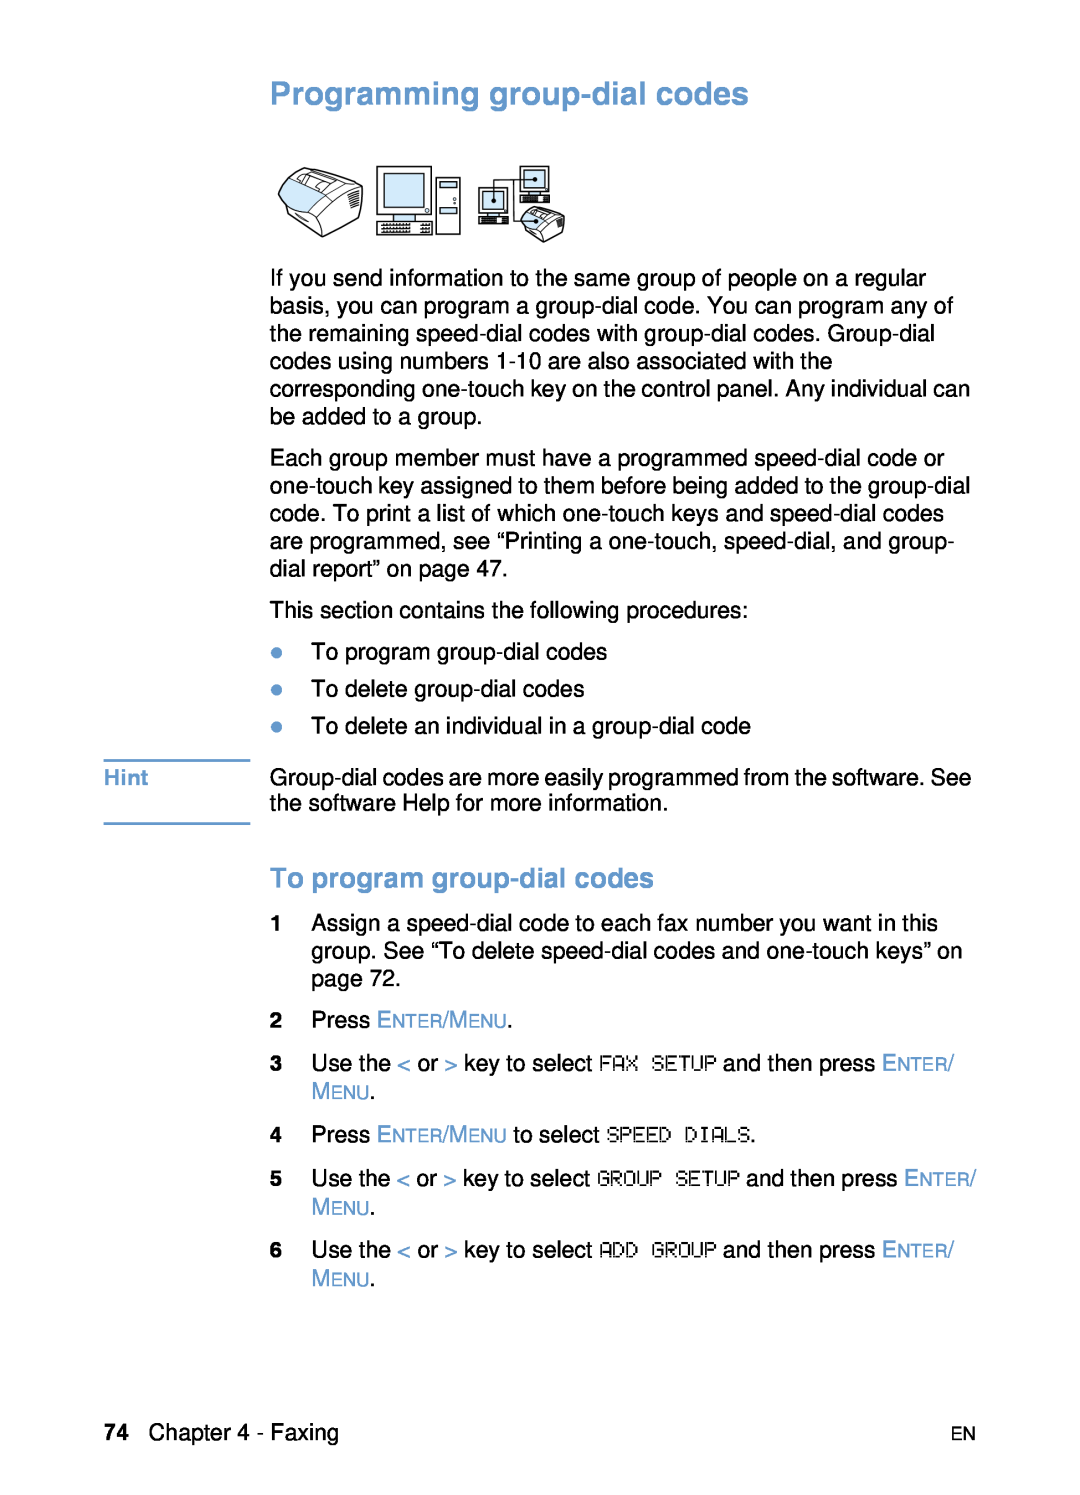 HP 3200 manual Programming group-dial codes, To program group-dial codes, Hint 